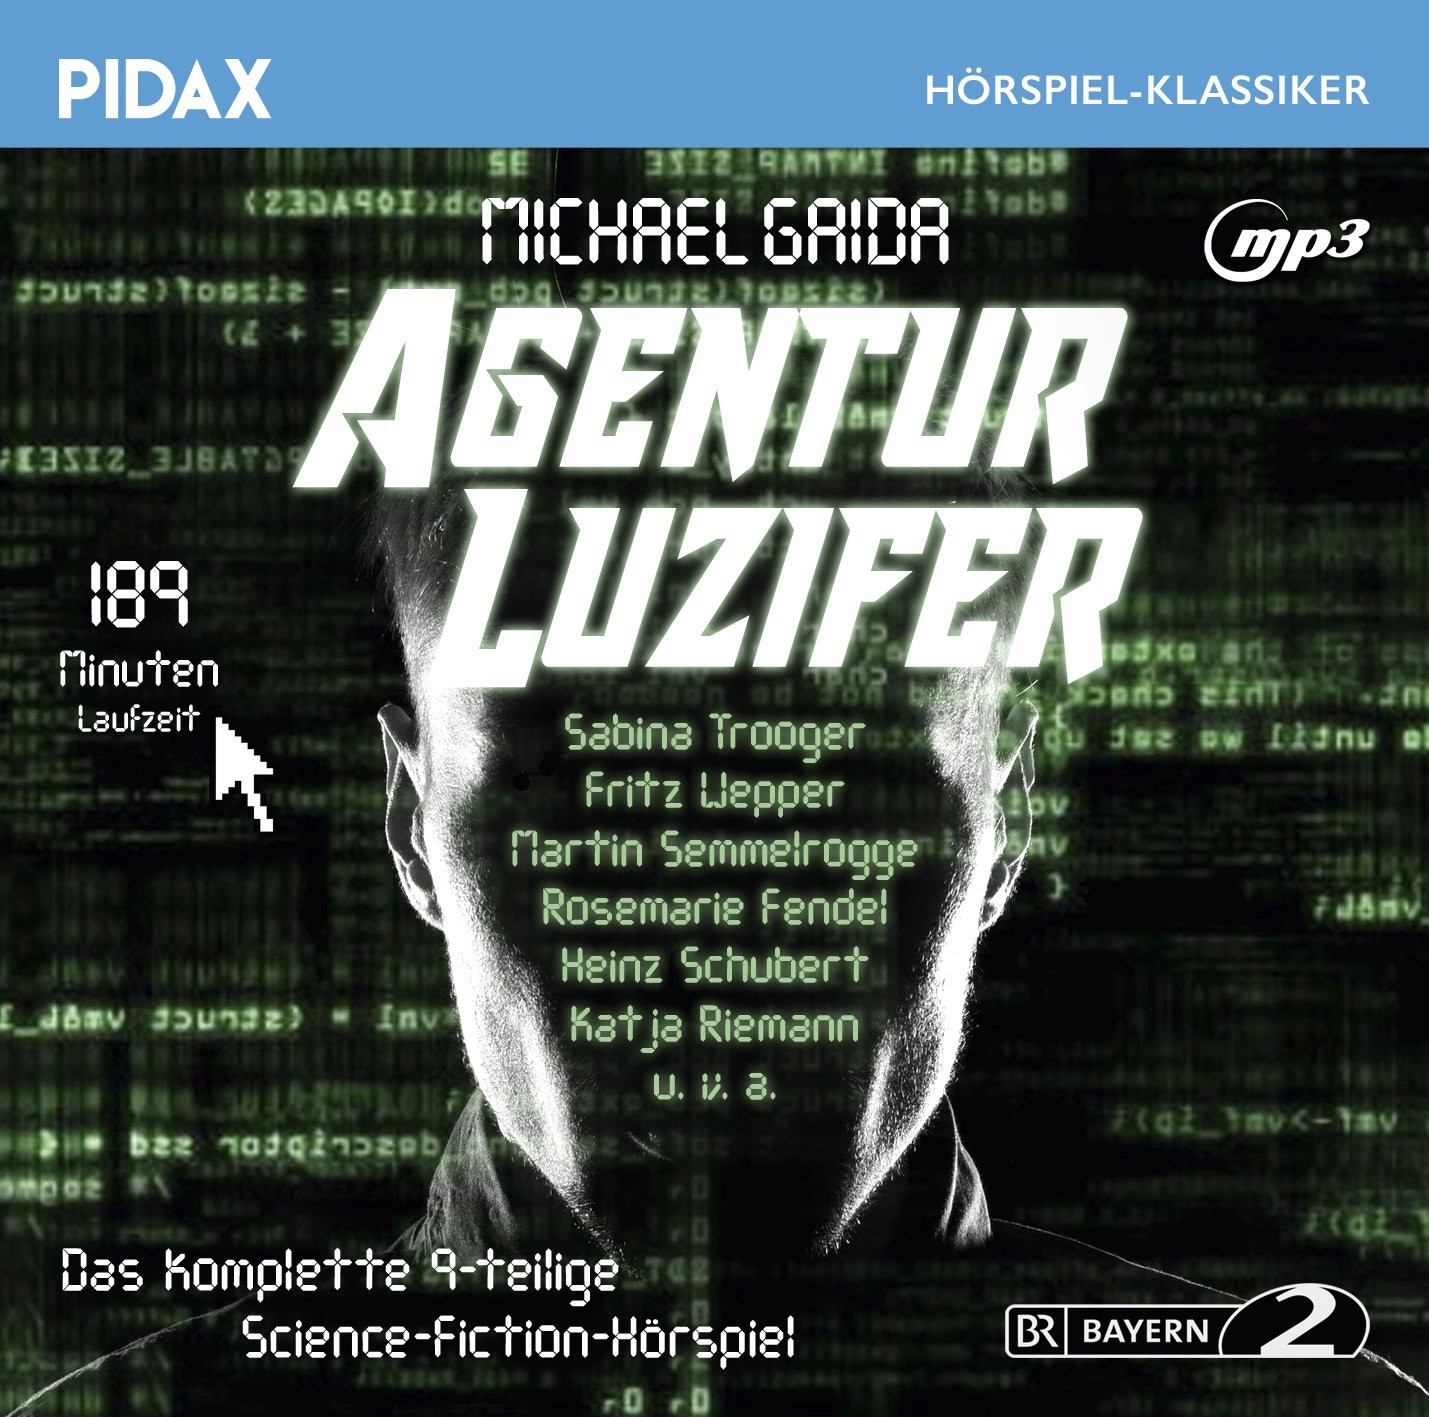 Pidax Hörspiel Klassiker - Agentur Luzifer